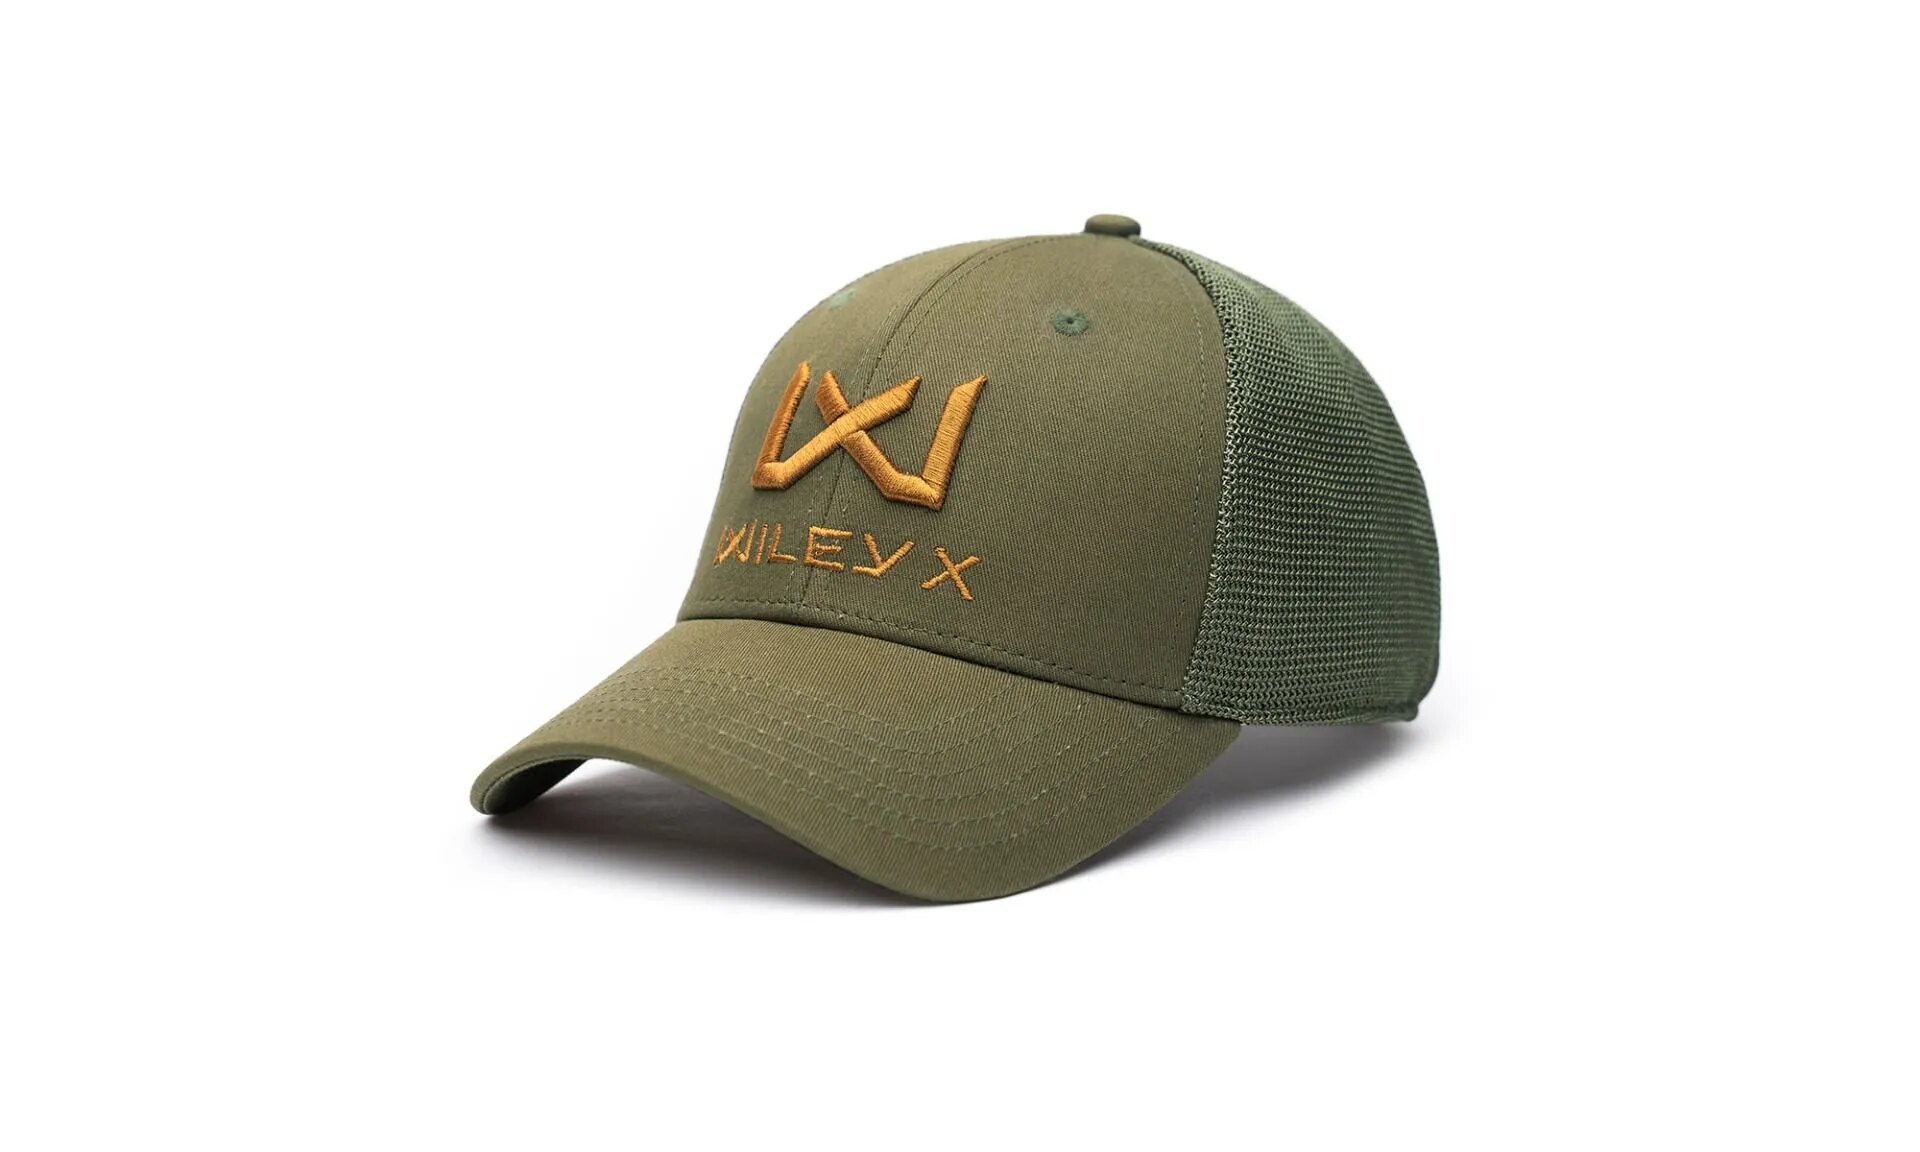 Šiltovka Trucker Cap Logo WX WileyX® – Tan, Olive Green  (Farba: Olive Green , Varianta: Tan)